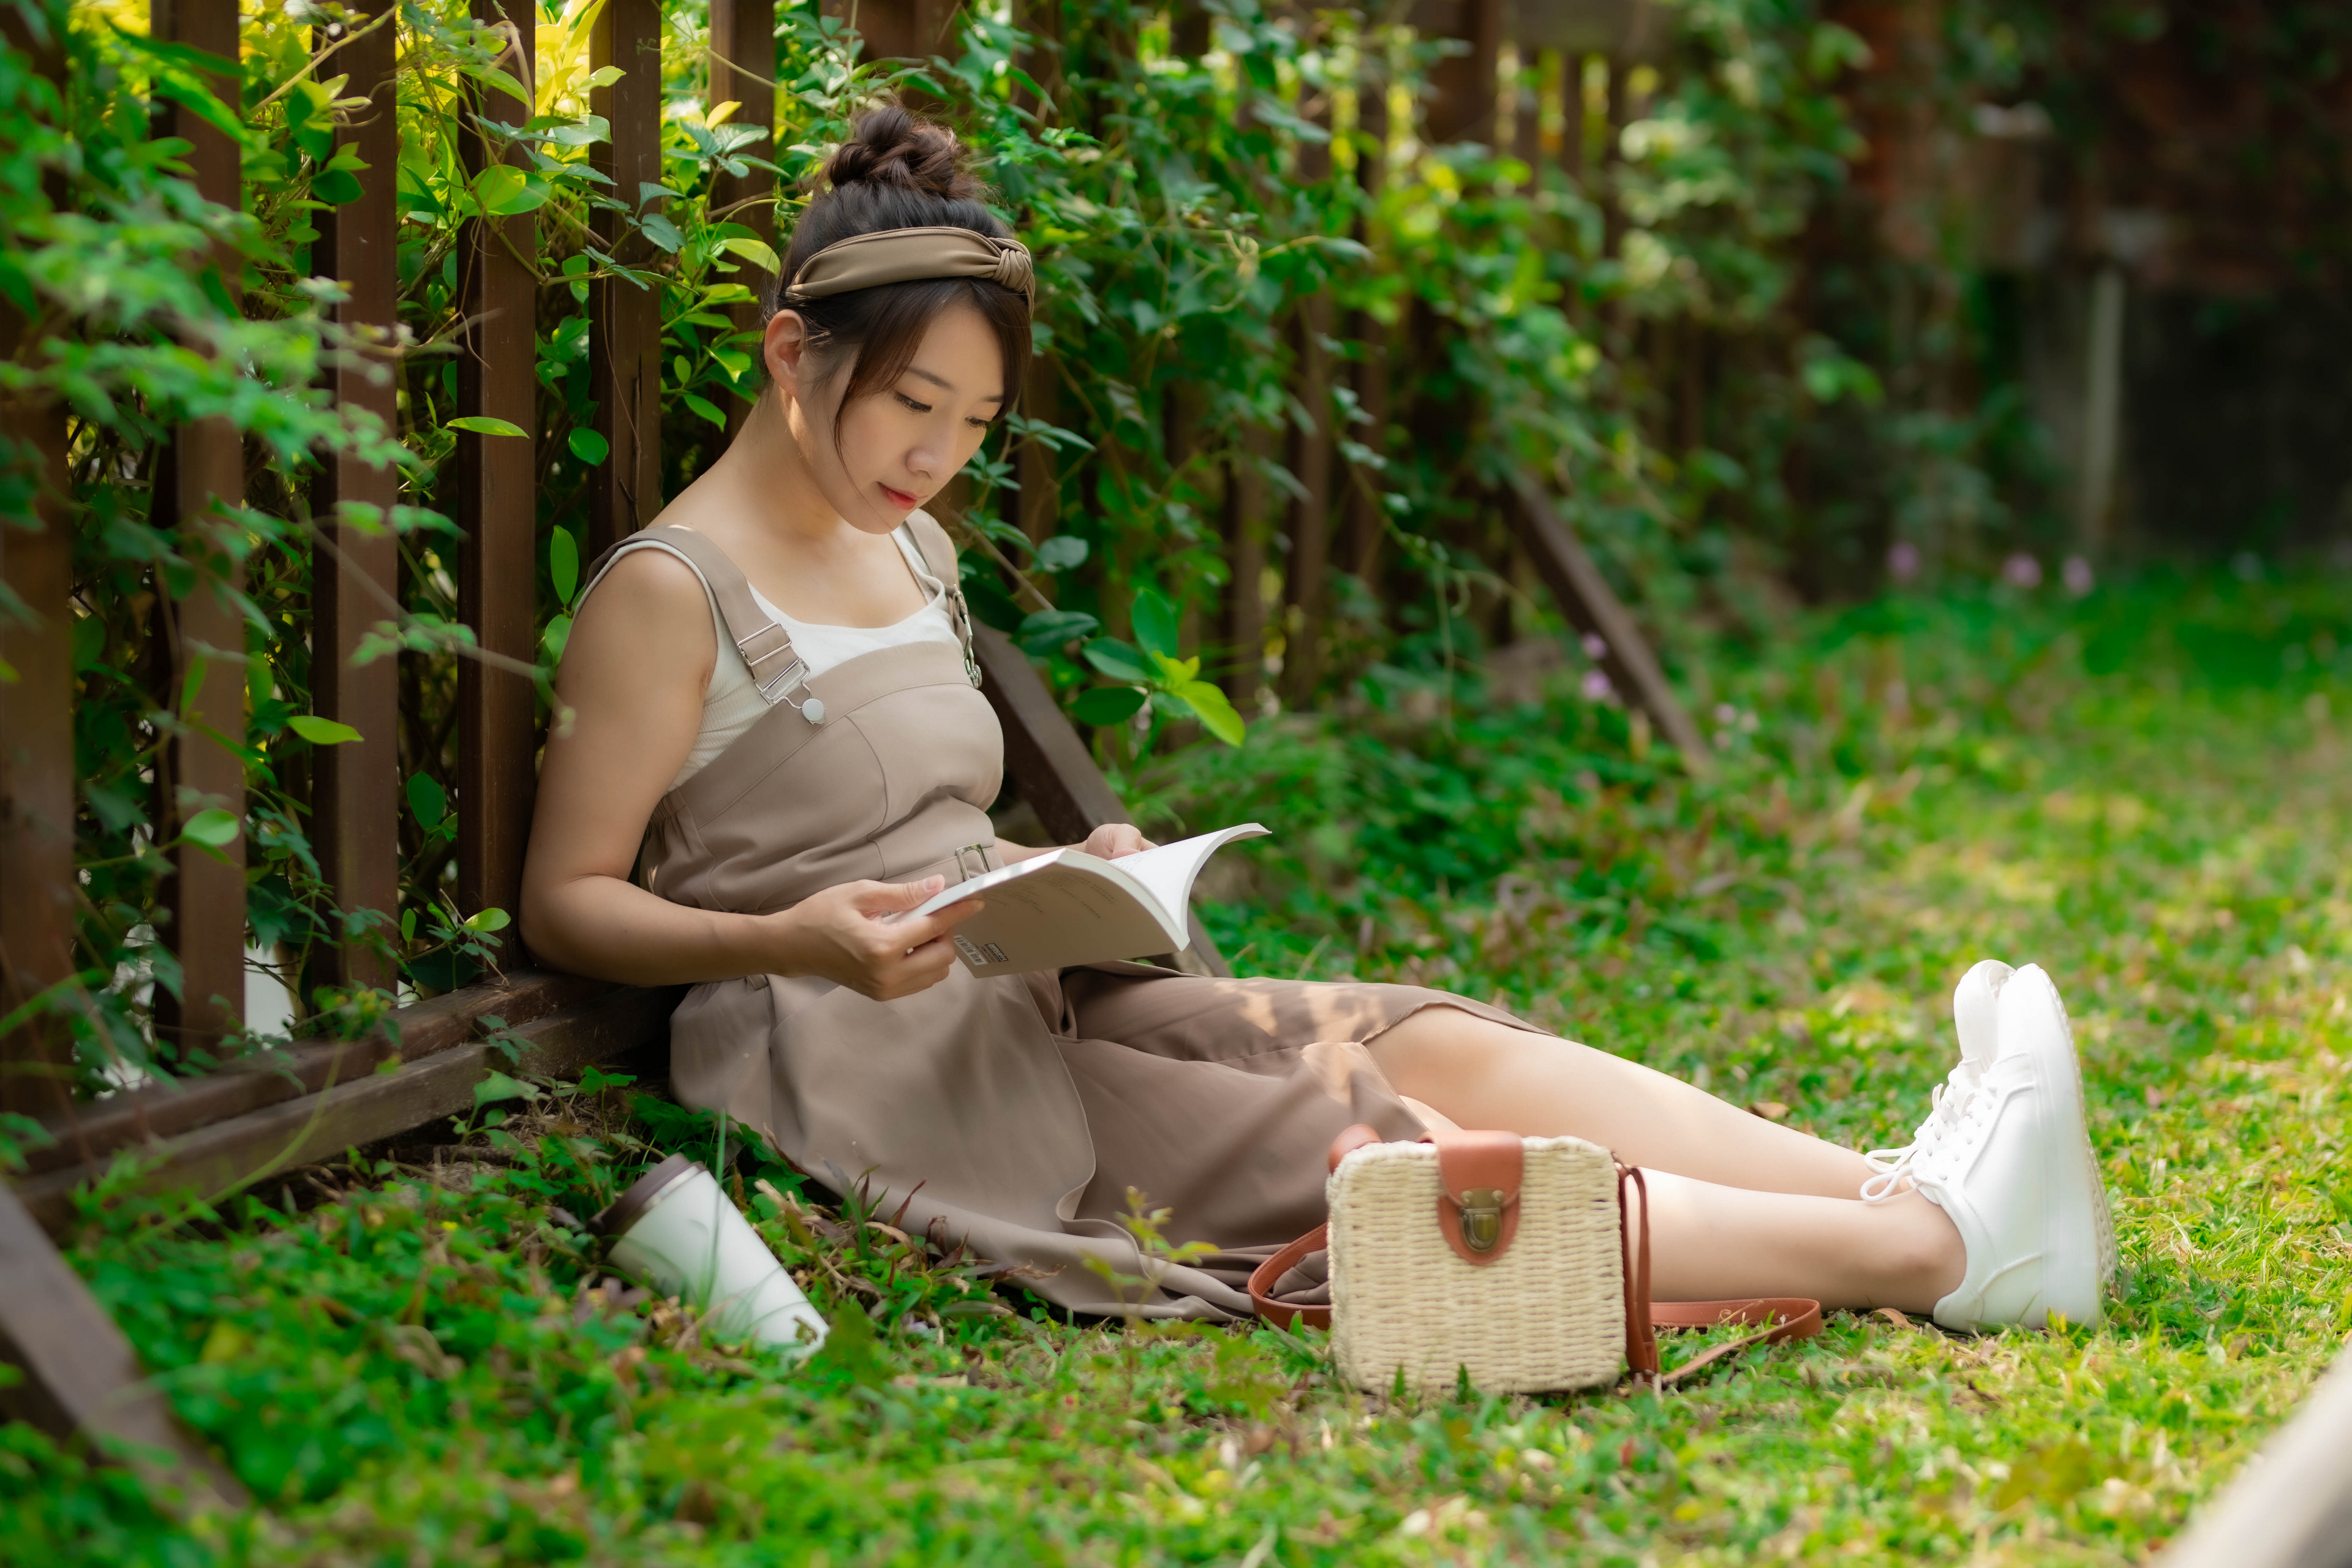 Asian Model Women Long Hair Dark Hair Sitting Grass Fence Leaning Reading Books Handbags Sneakers Co 3840x2560